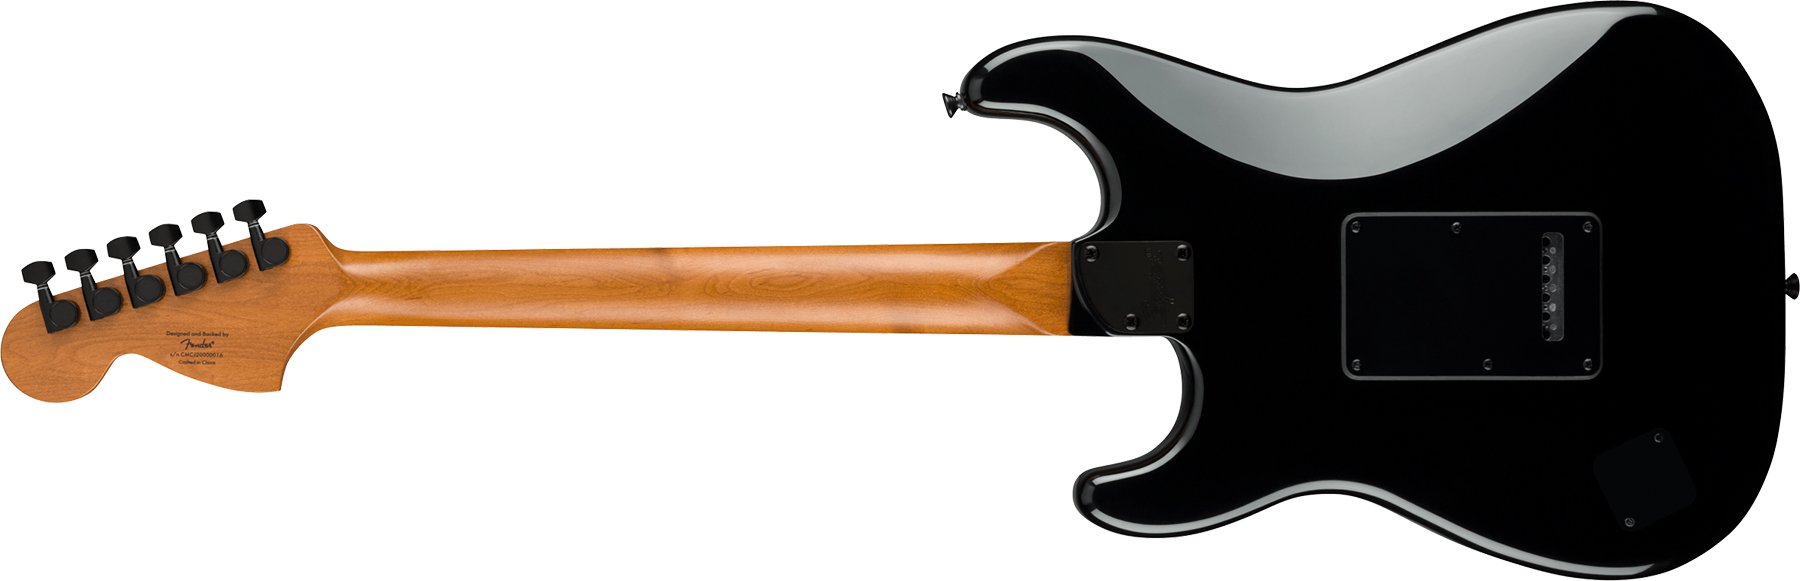 Squier Strat Contemporary Special Sss Trem Mn - Black - Str shape electric guitar - Variation 1